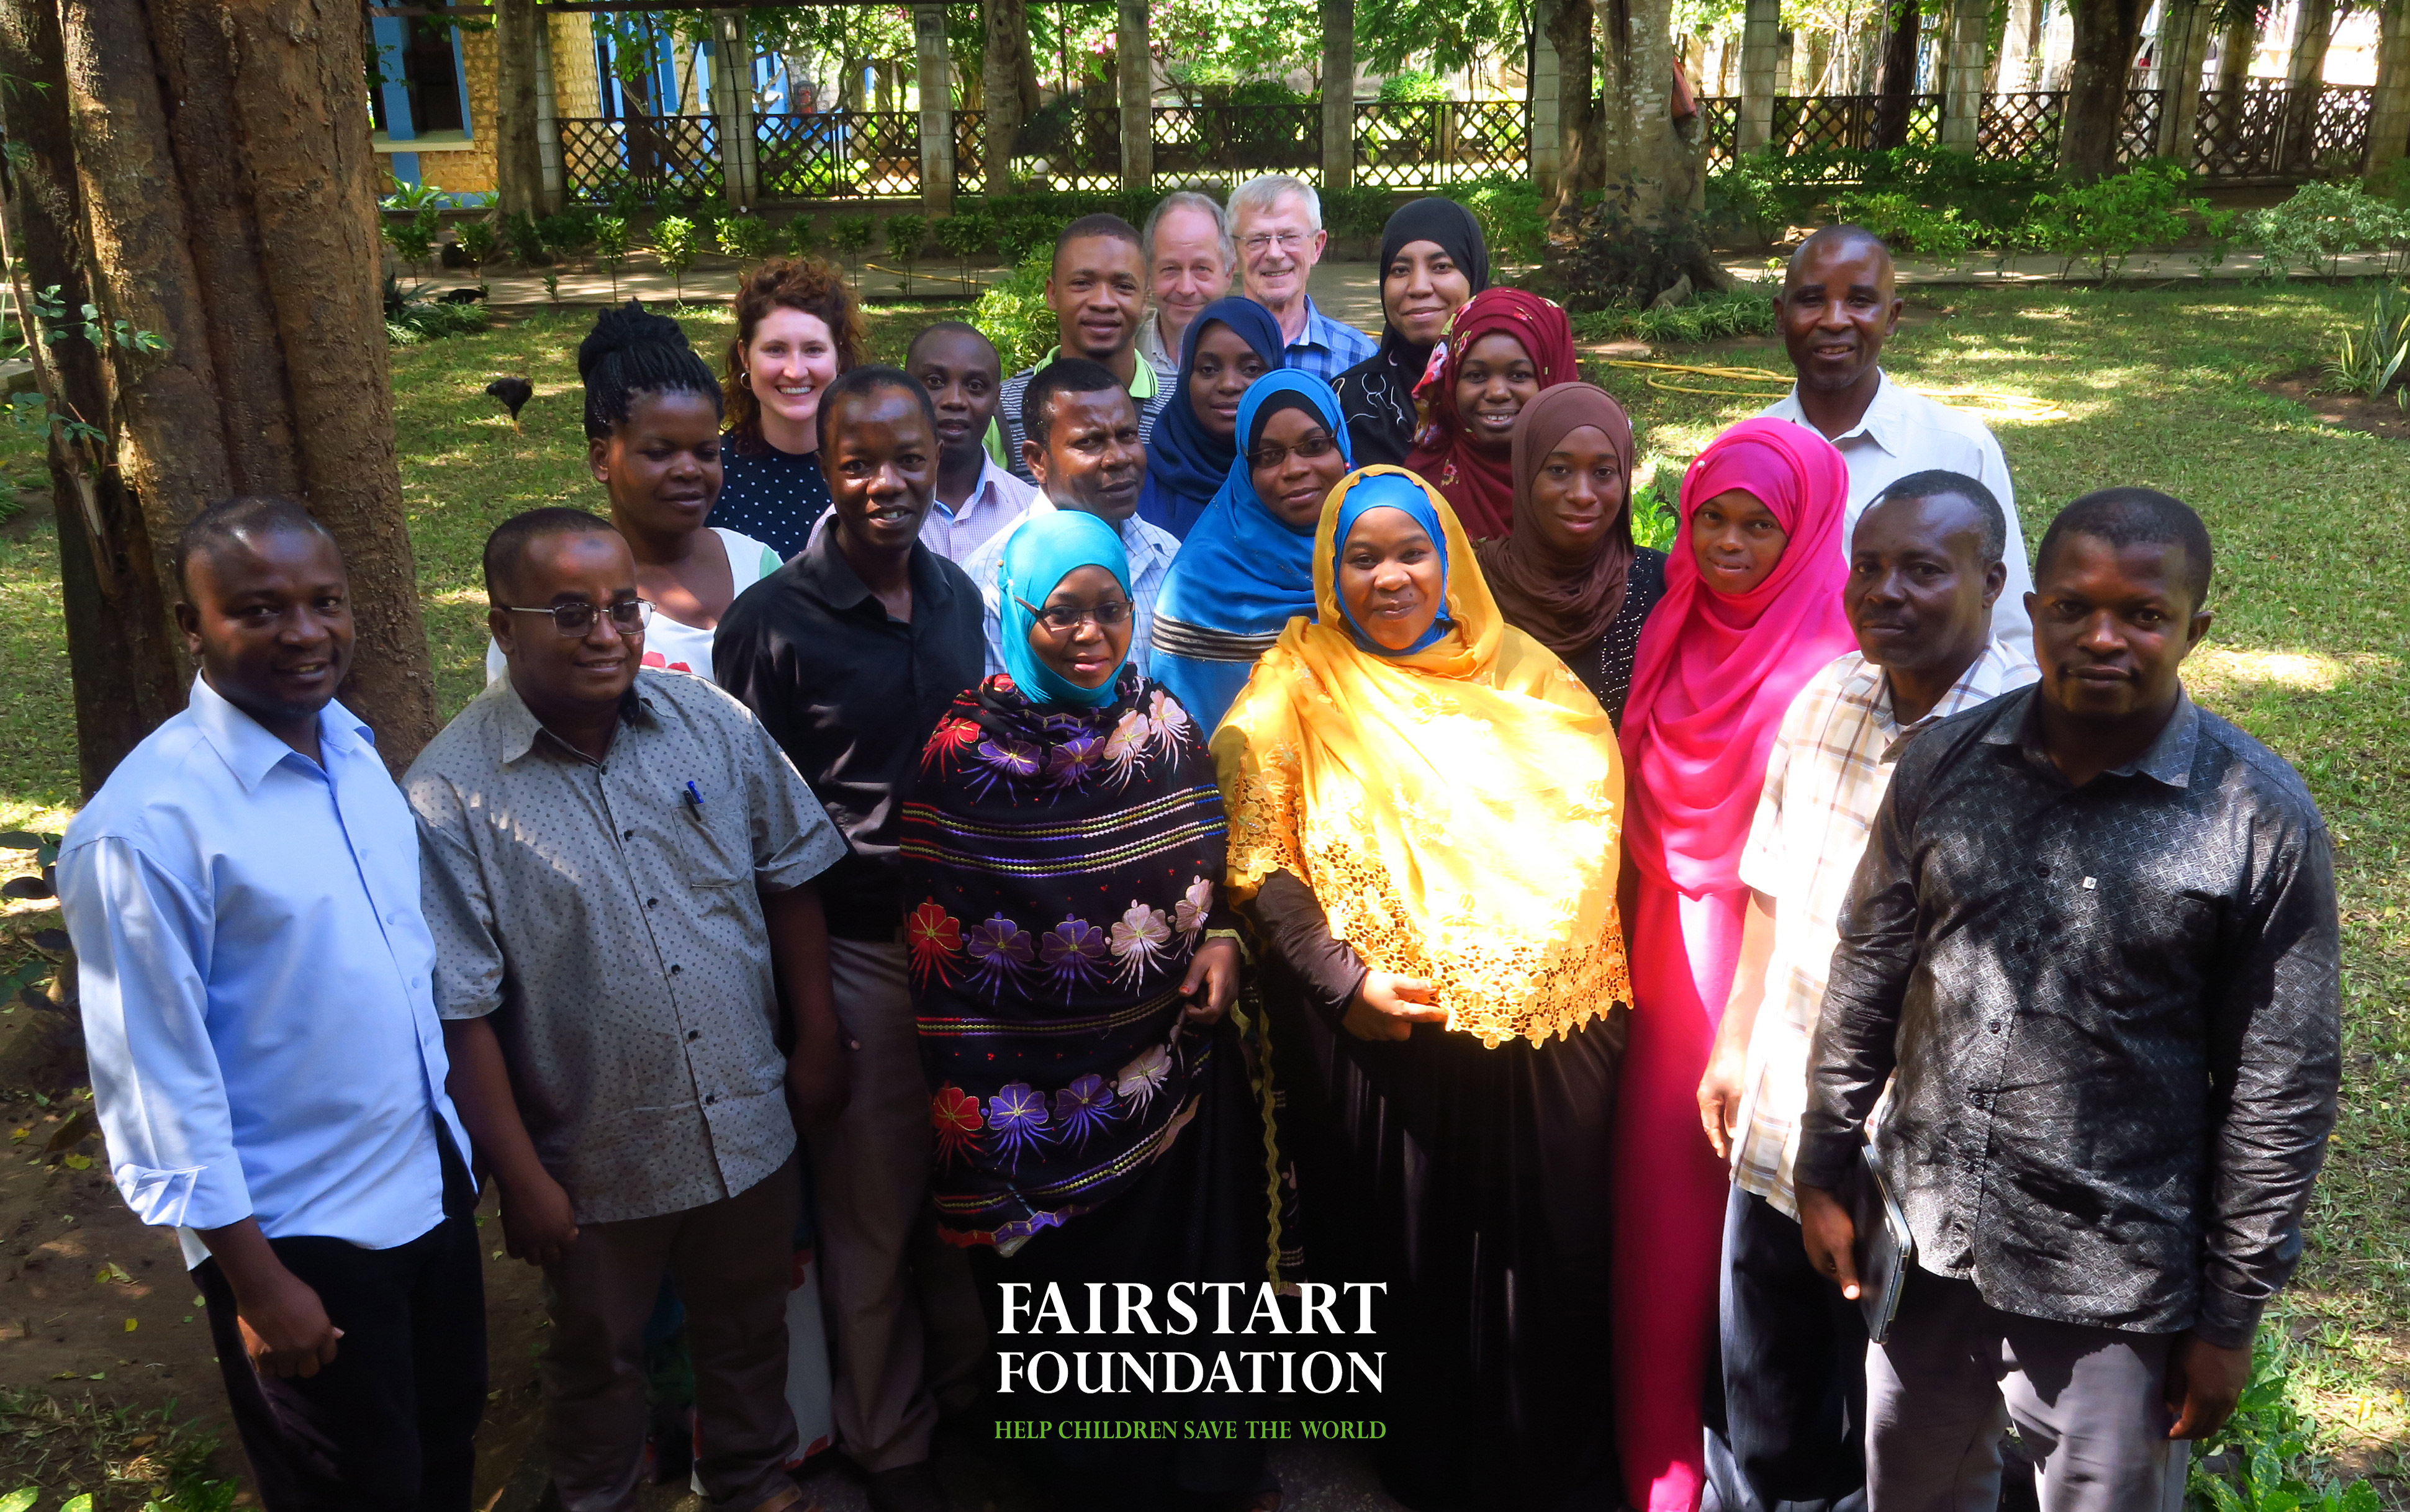 Vellykket opstart af nyt instruktørhold i SOS Børnebyerne i Zanzibar